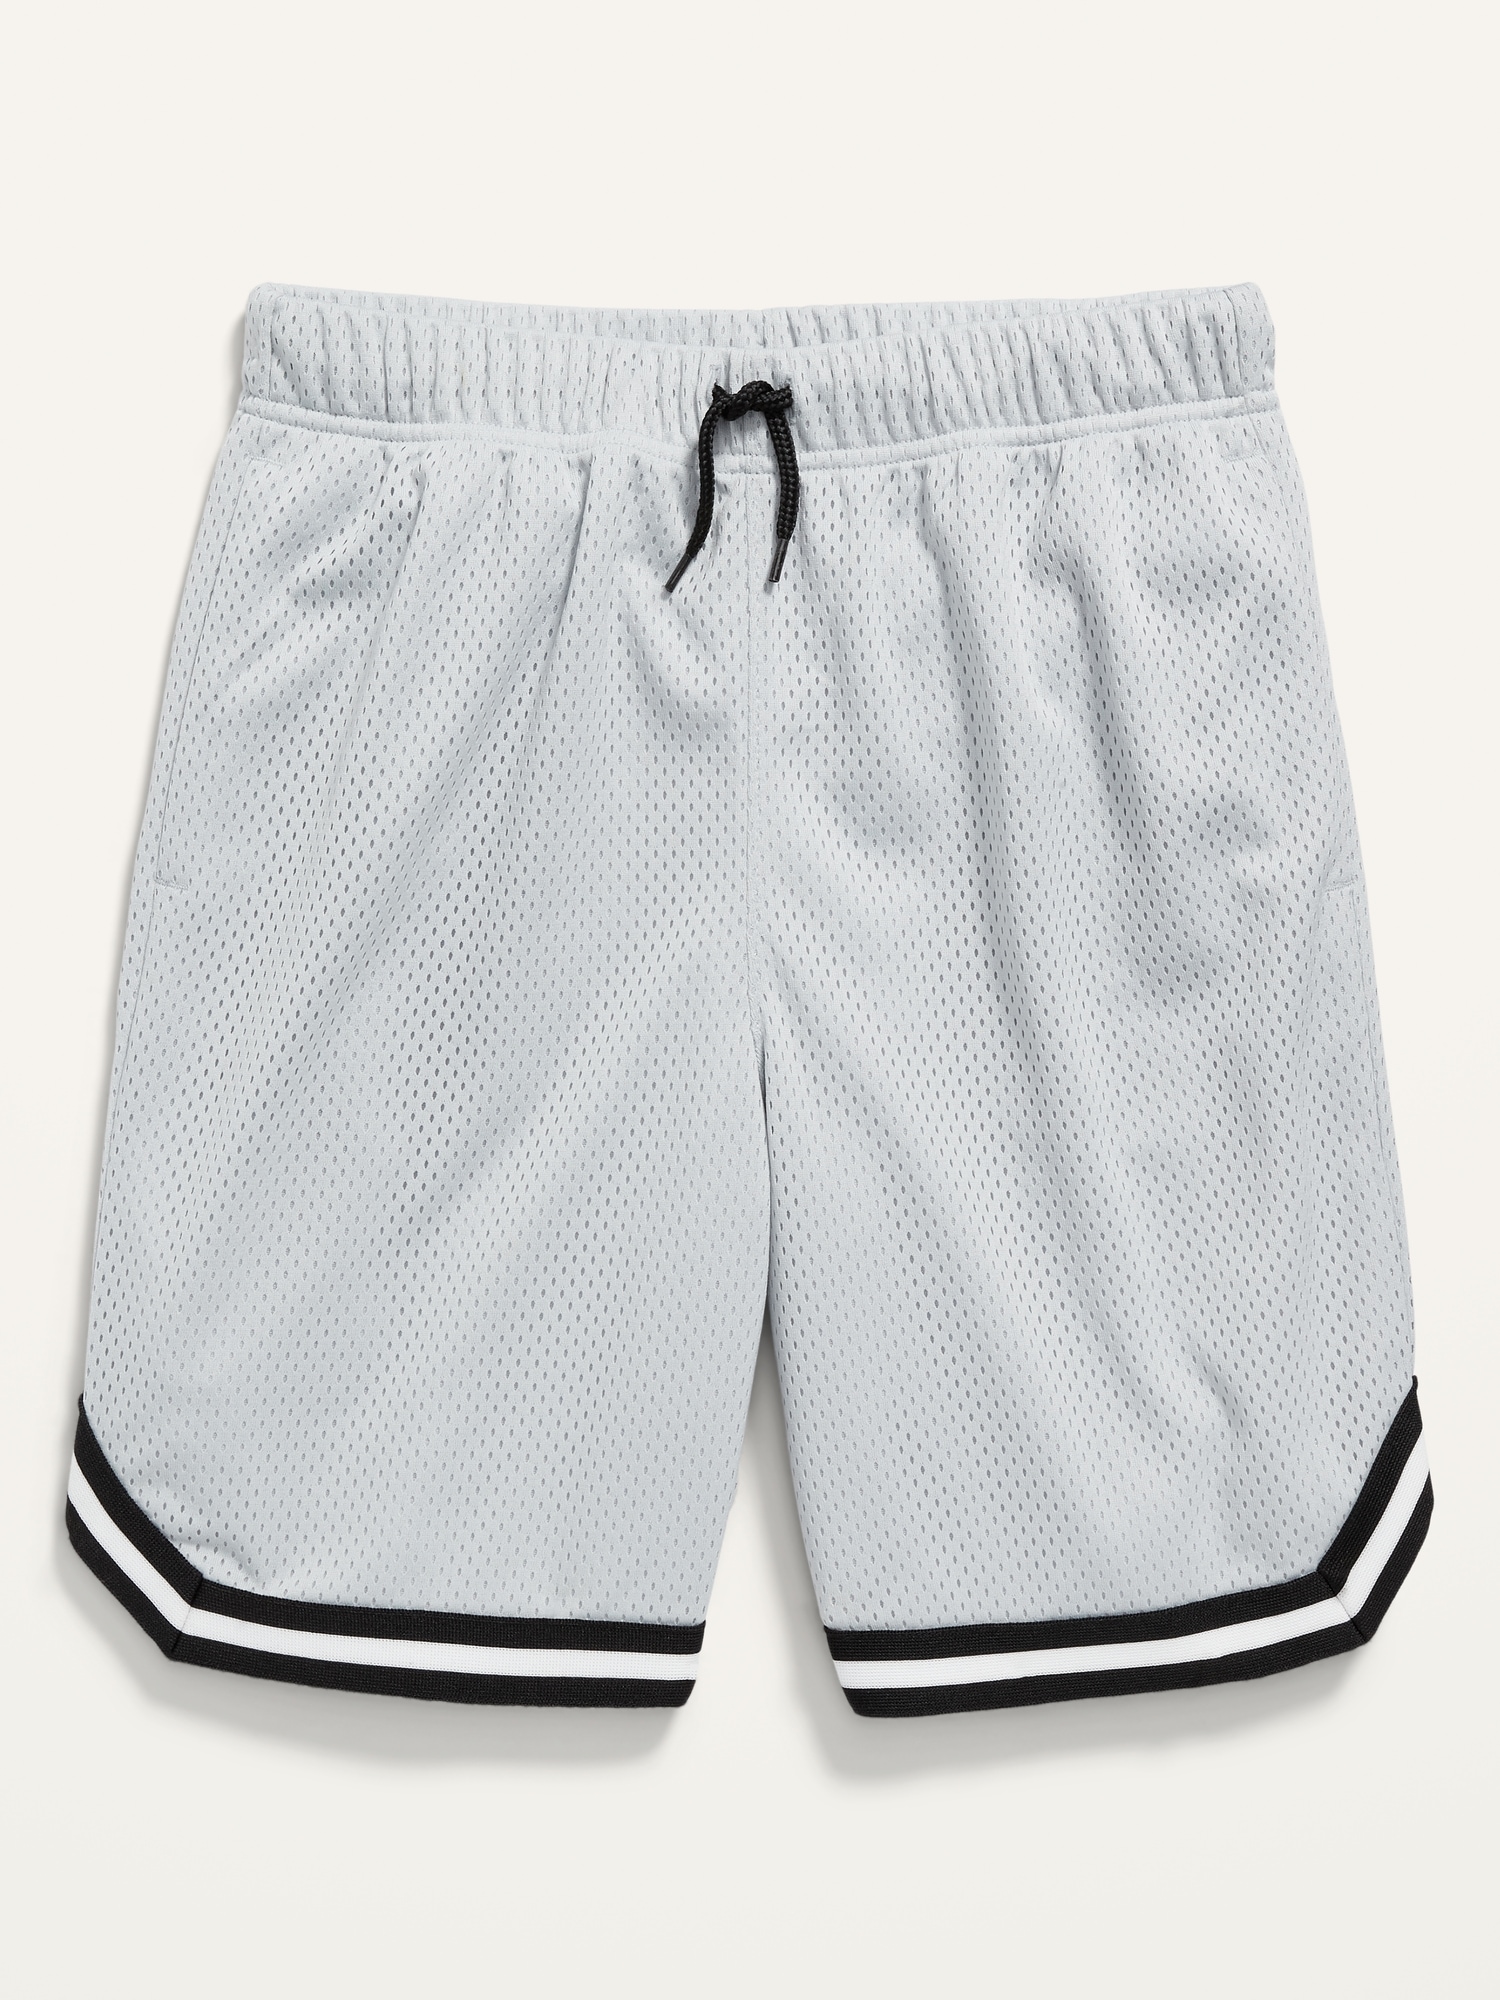 Old Navy Men's Go-Dry Mesh Basketball Shorts